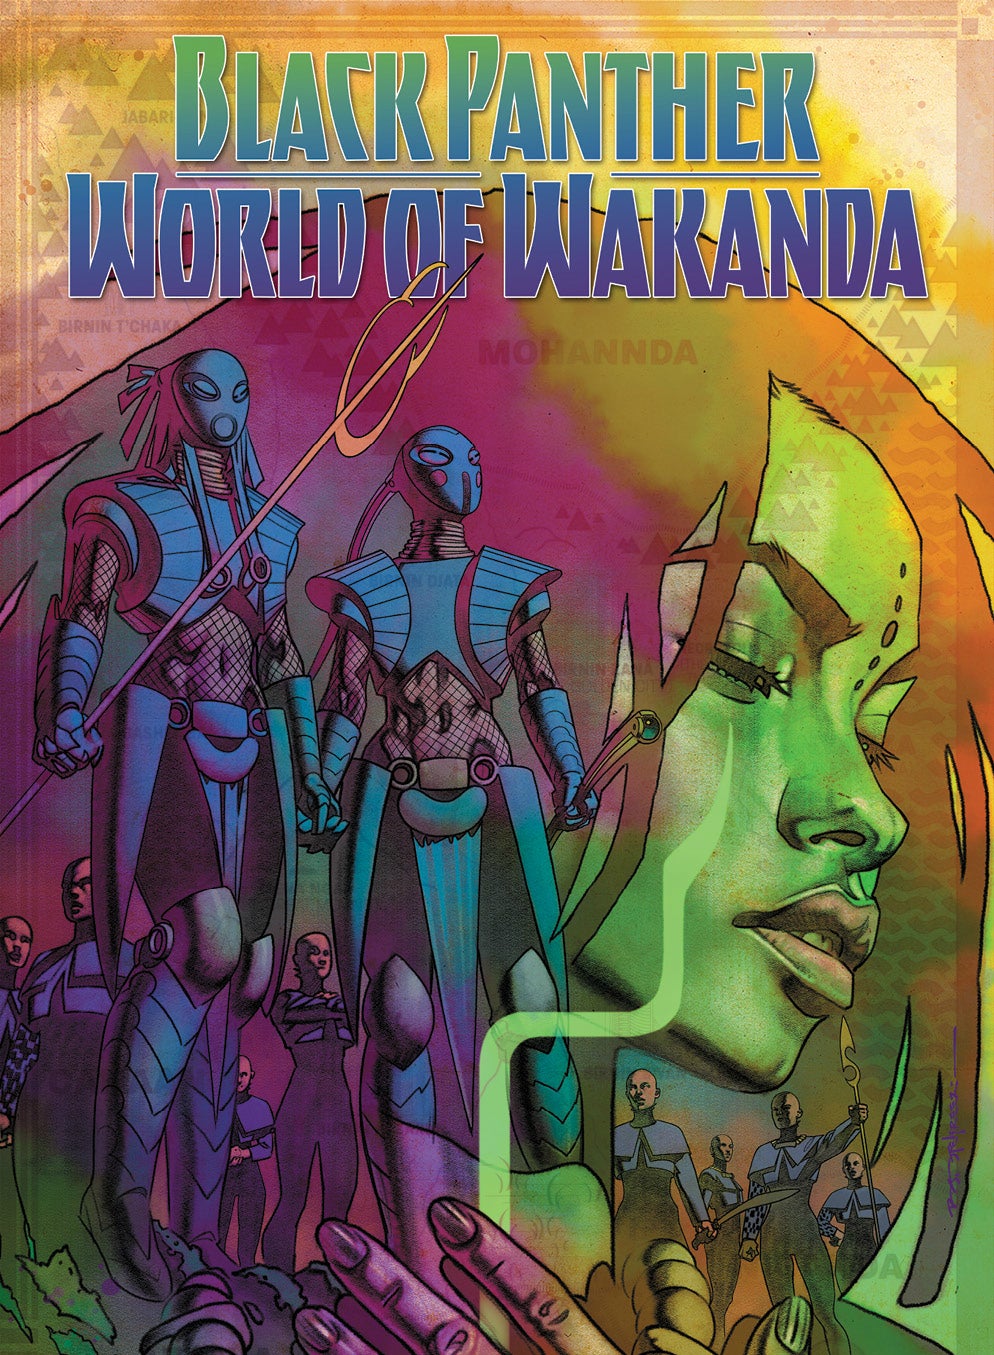 Roxane Gay And Yona Harvey Didn’t Hesitate To Take On The 'World Of Wakanda'
